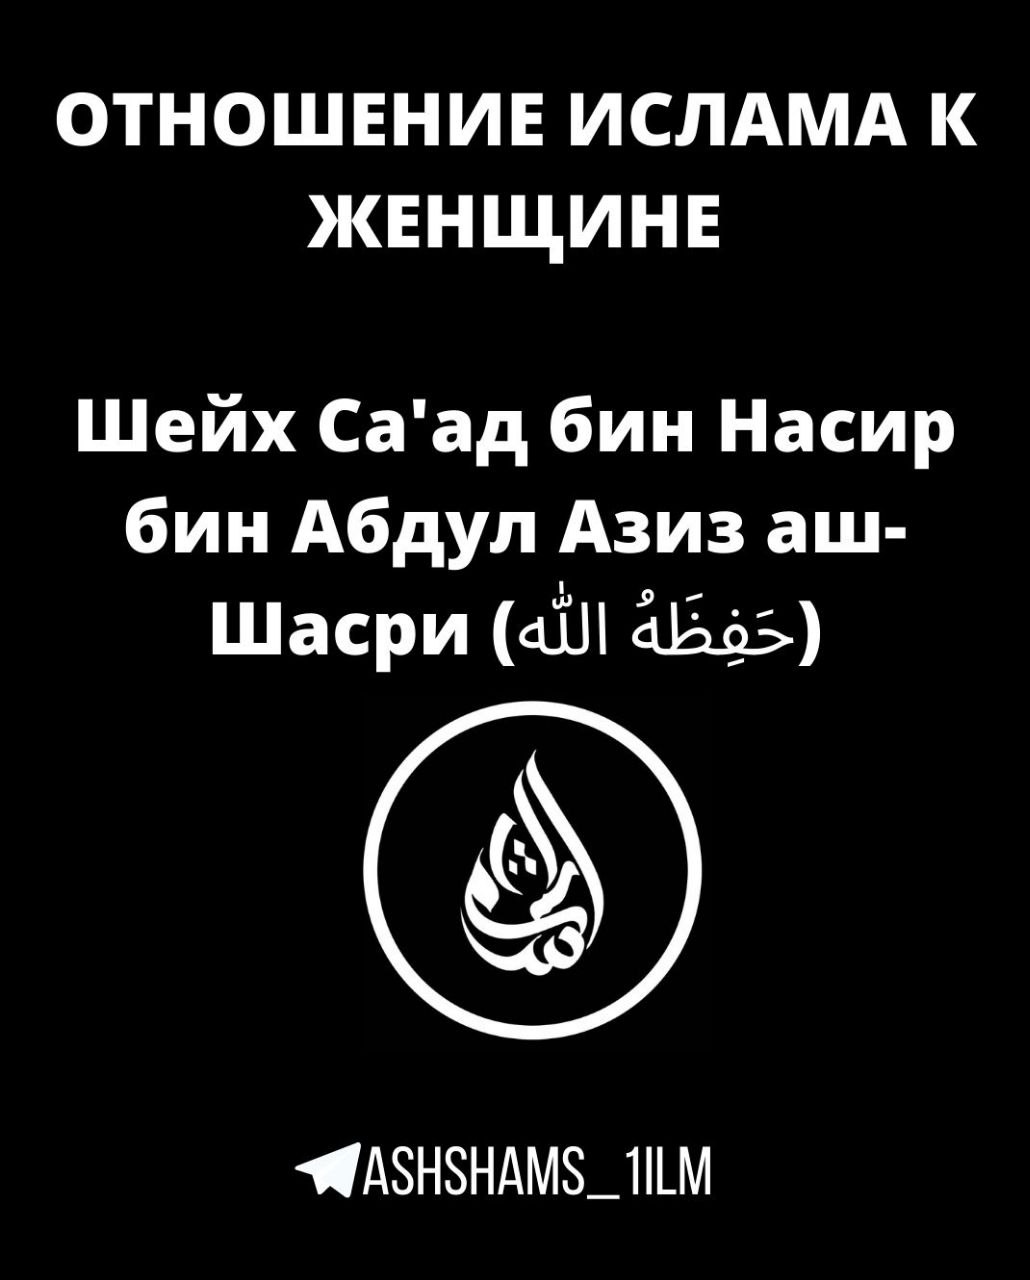 Мусульмане телеграмм. Исламские названия групп. Фото для профиля телеграмм для Исламского. "Москва мусульманская Telegram. Фото для главный телеграмм мусульманских.